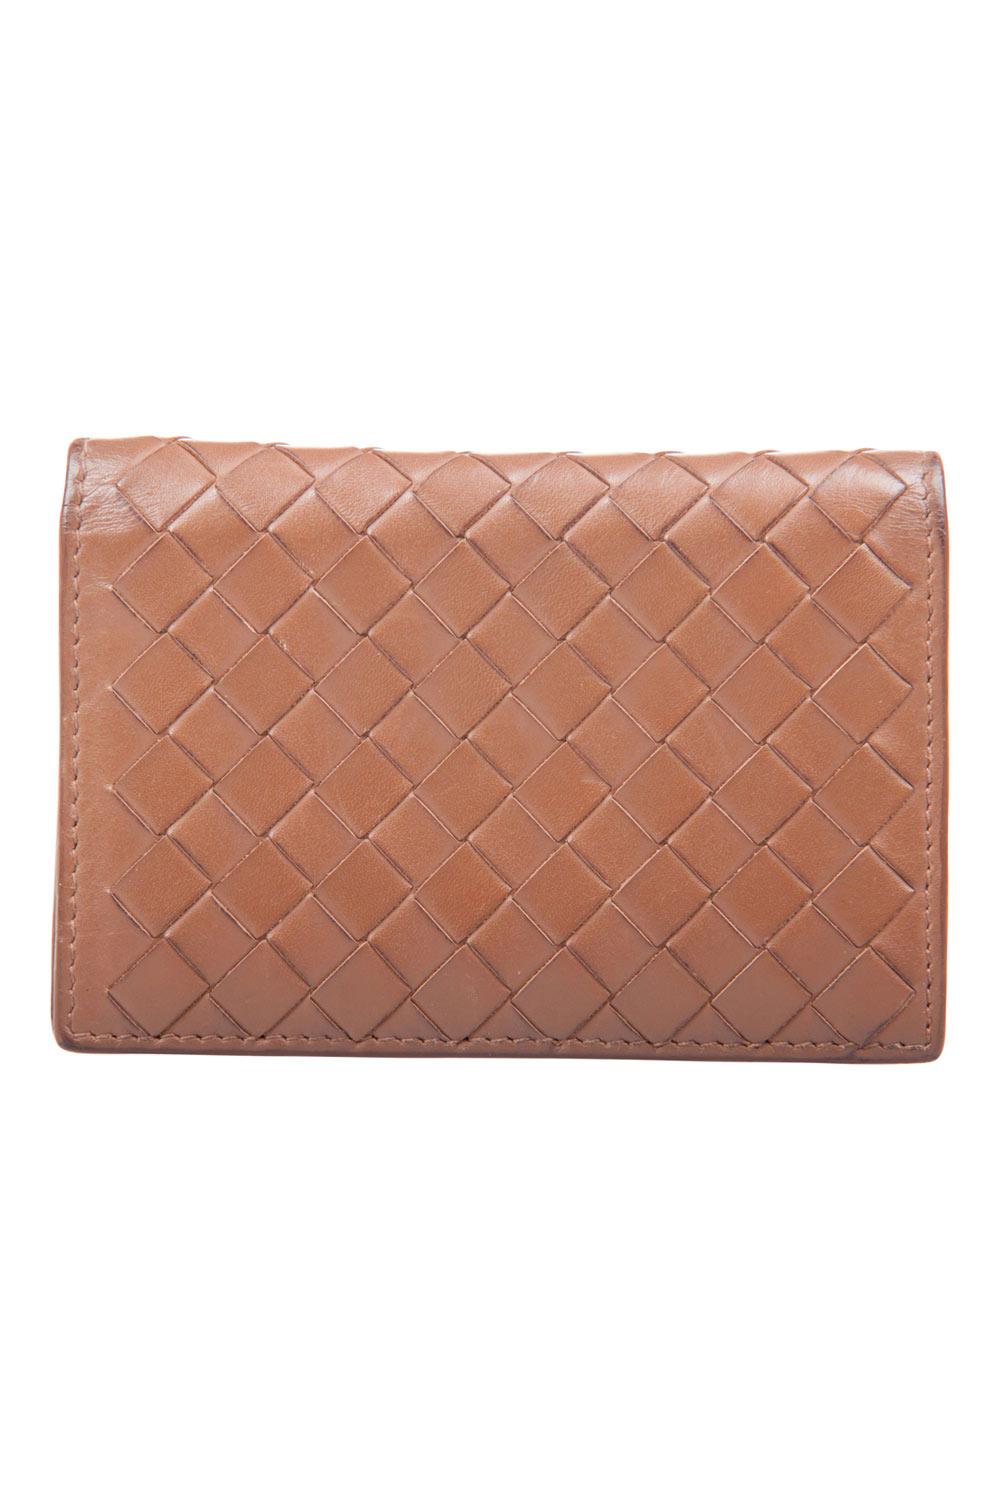 Bottega Veneta Brown Intrecciato Leather Bifold Card Case - Lyst